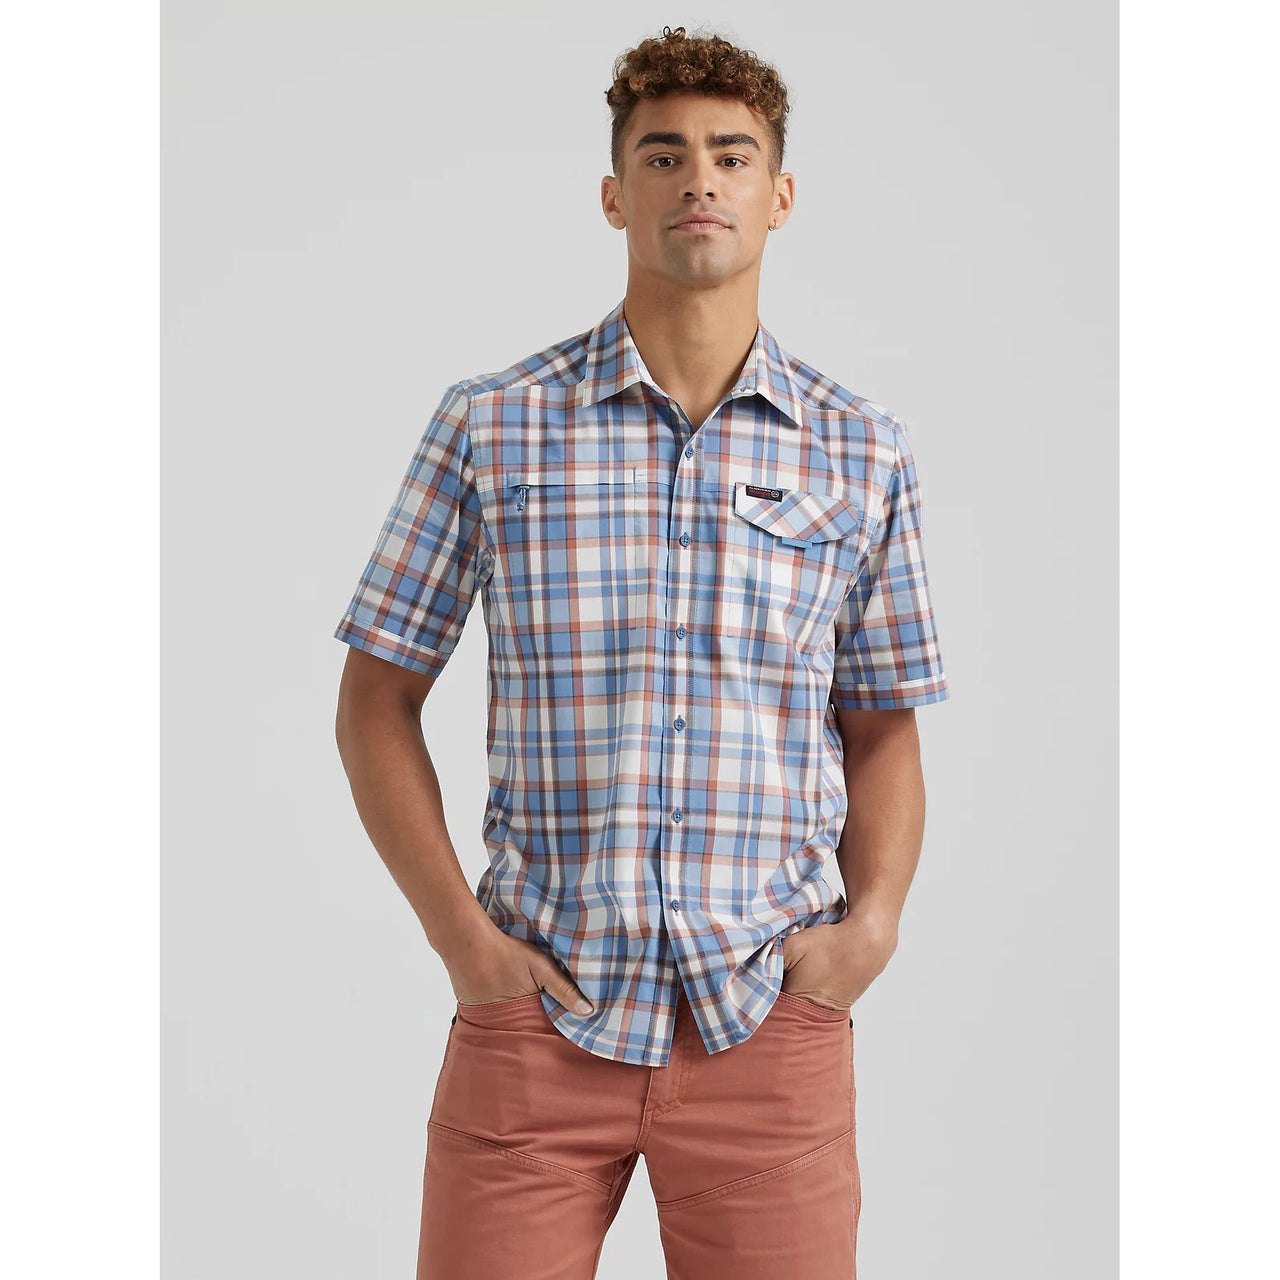 Wrangler Men's ATG Short Sleeve Asymmetric Zip Pocket Plaid Shirt - Rustic Plaid